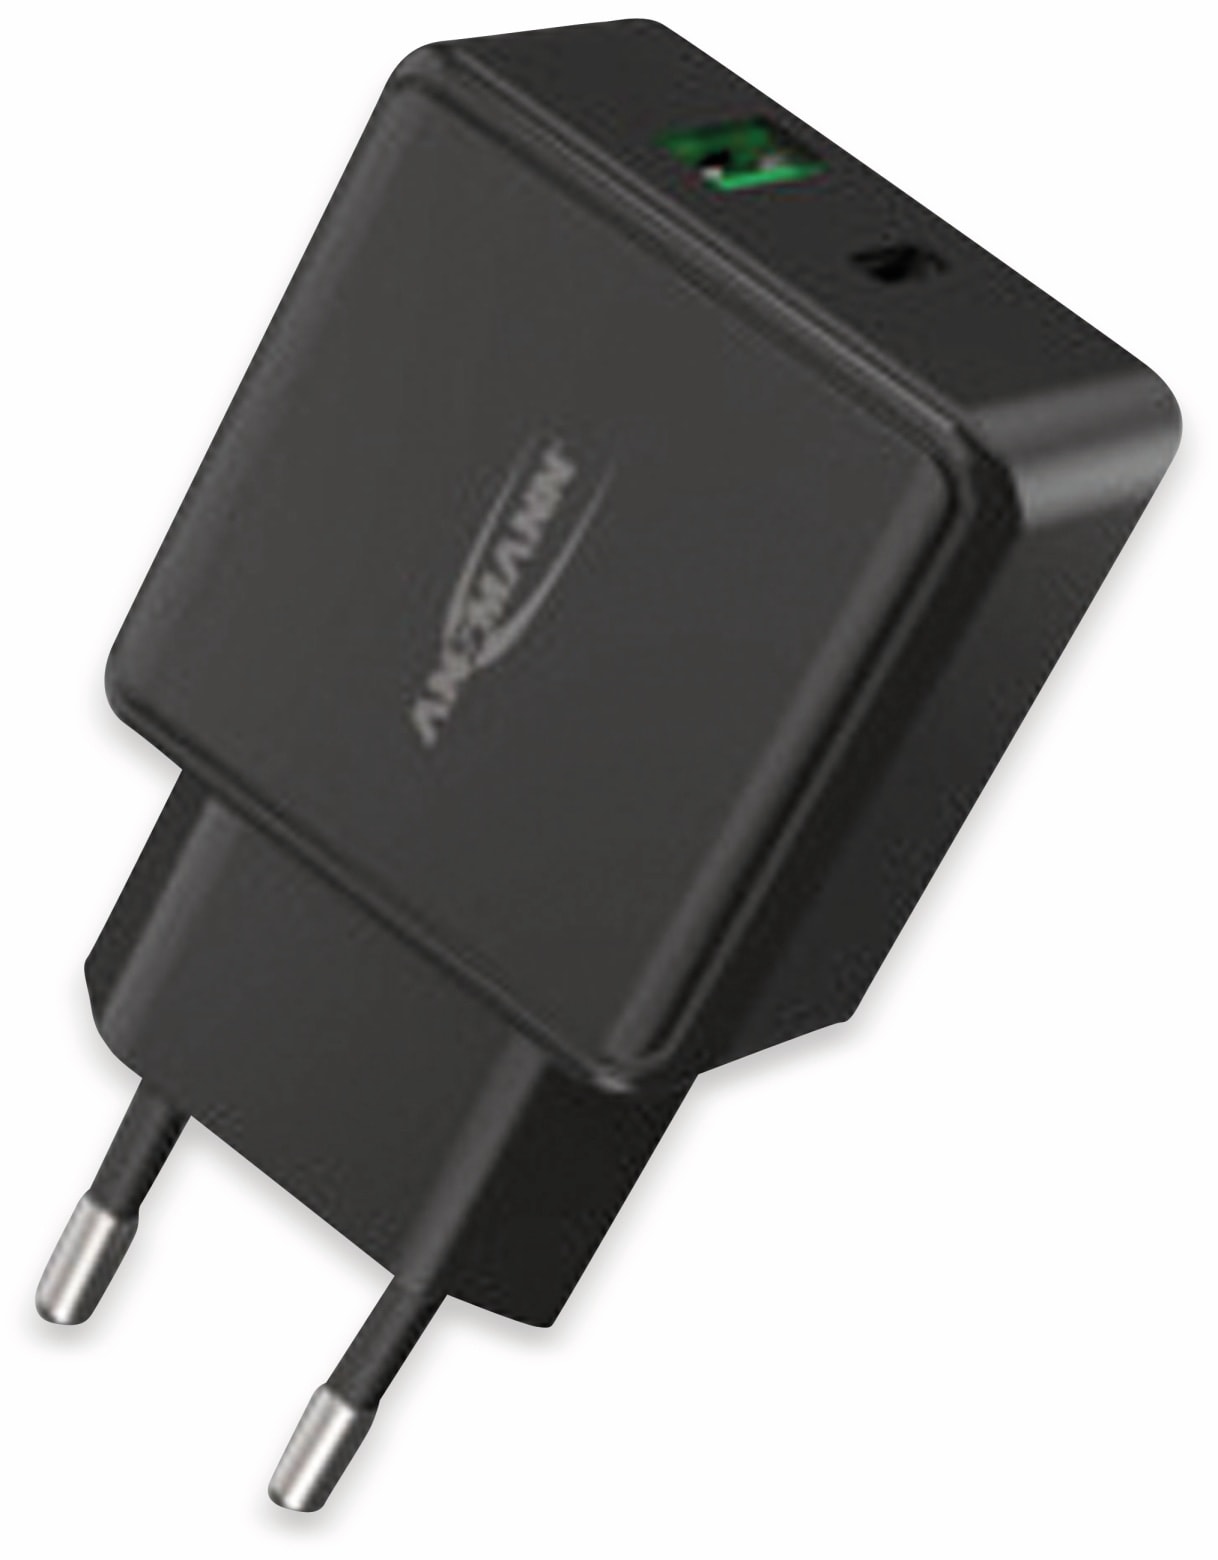 ANSMANN USB-Ladegerät HomeCharger HC218PD, 5 - 12V, 3000 mA, schwarz